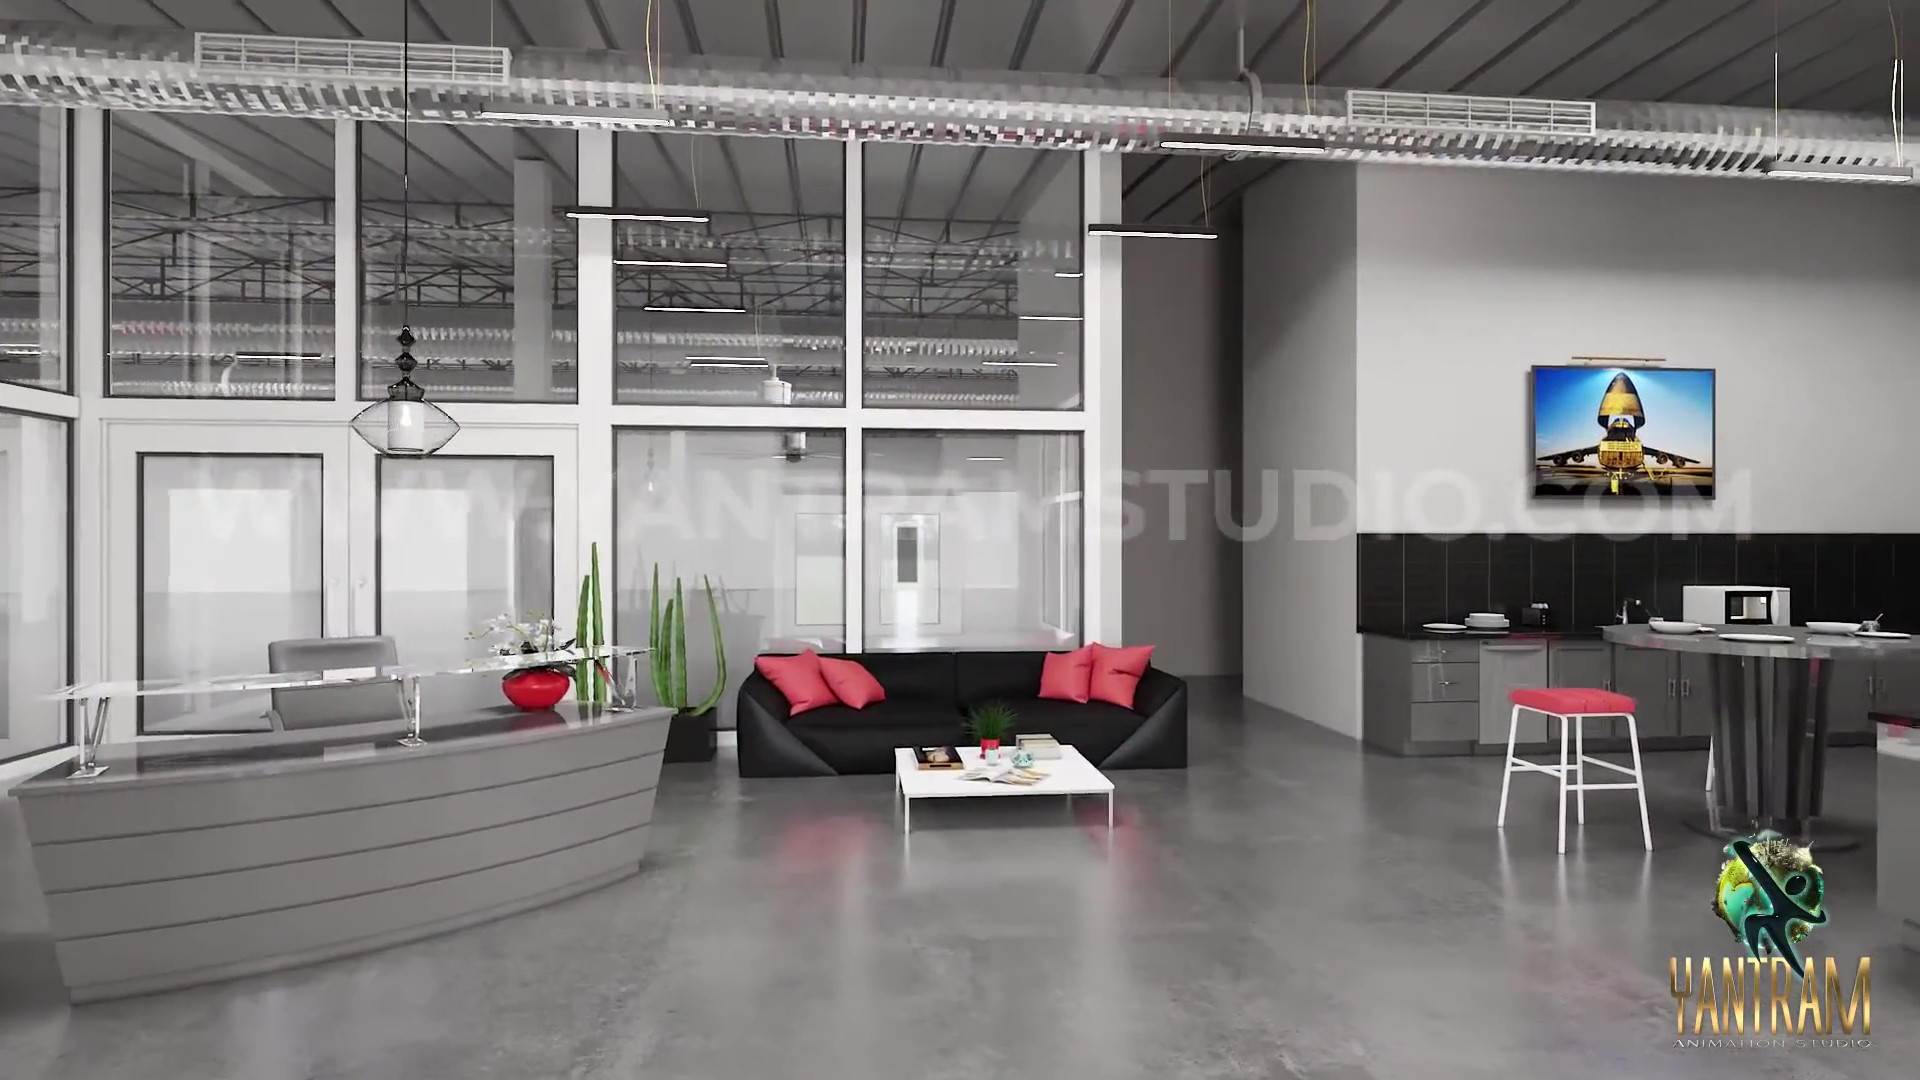 Y2Mate.is - Architectural walkthrough presentation Of Industrial Warehouse  - Office interior Design tutorial-umtd9uqIW-c-1080p-2.jpg -  by Yantramarchitecturaldesignstudio